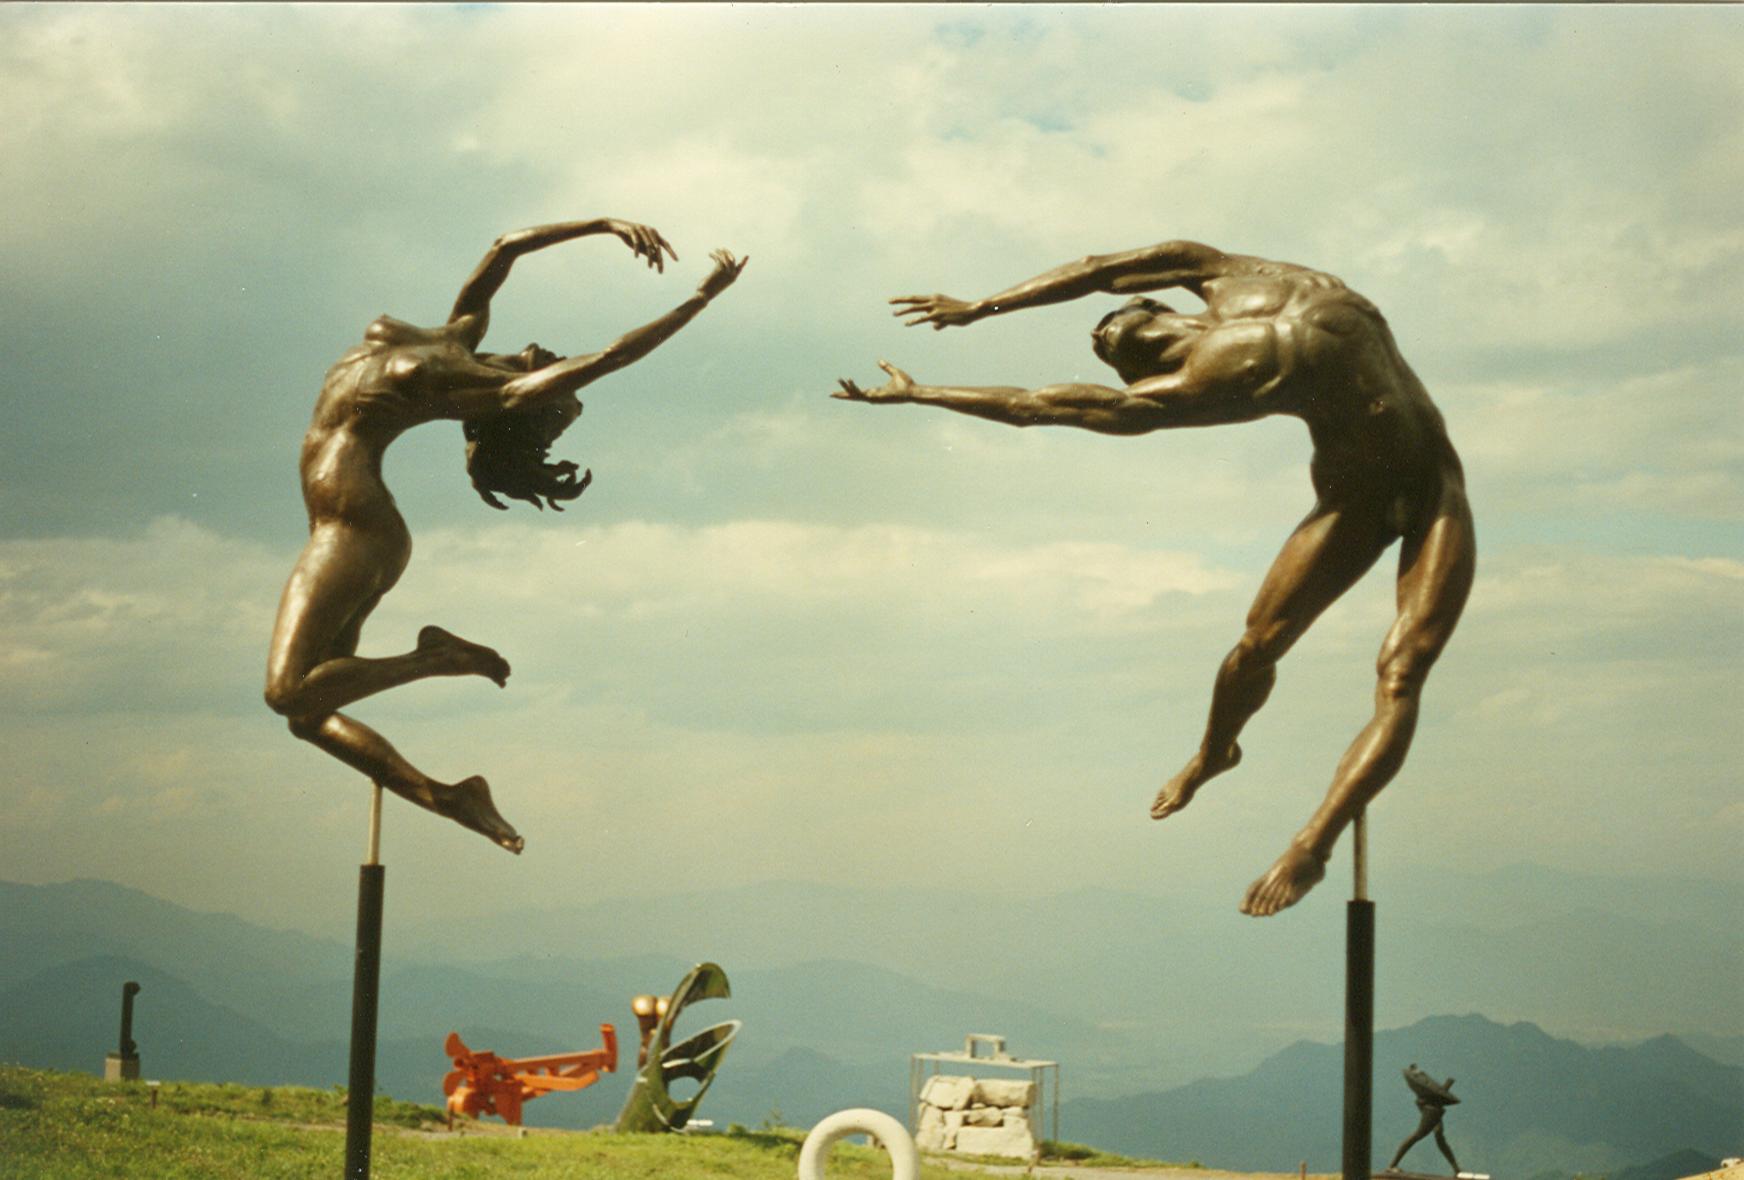 Reaching sculpture at Utsukushi-ga-hara Open Air Museum, Japan. Artist Zenos Frudakis.